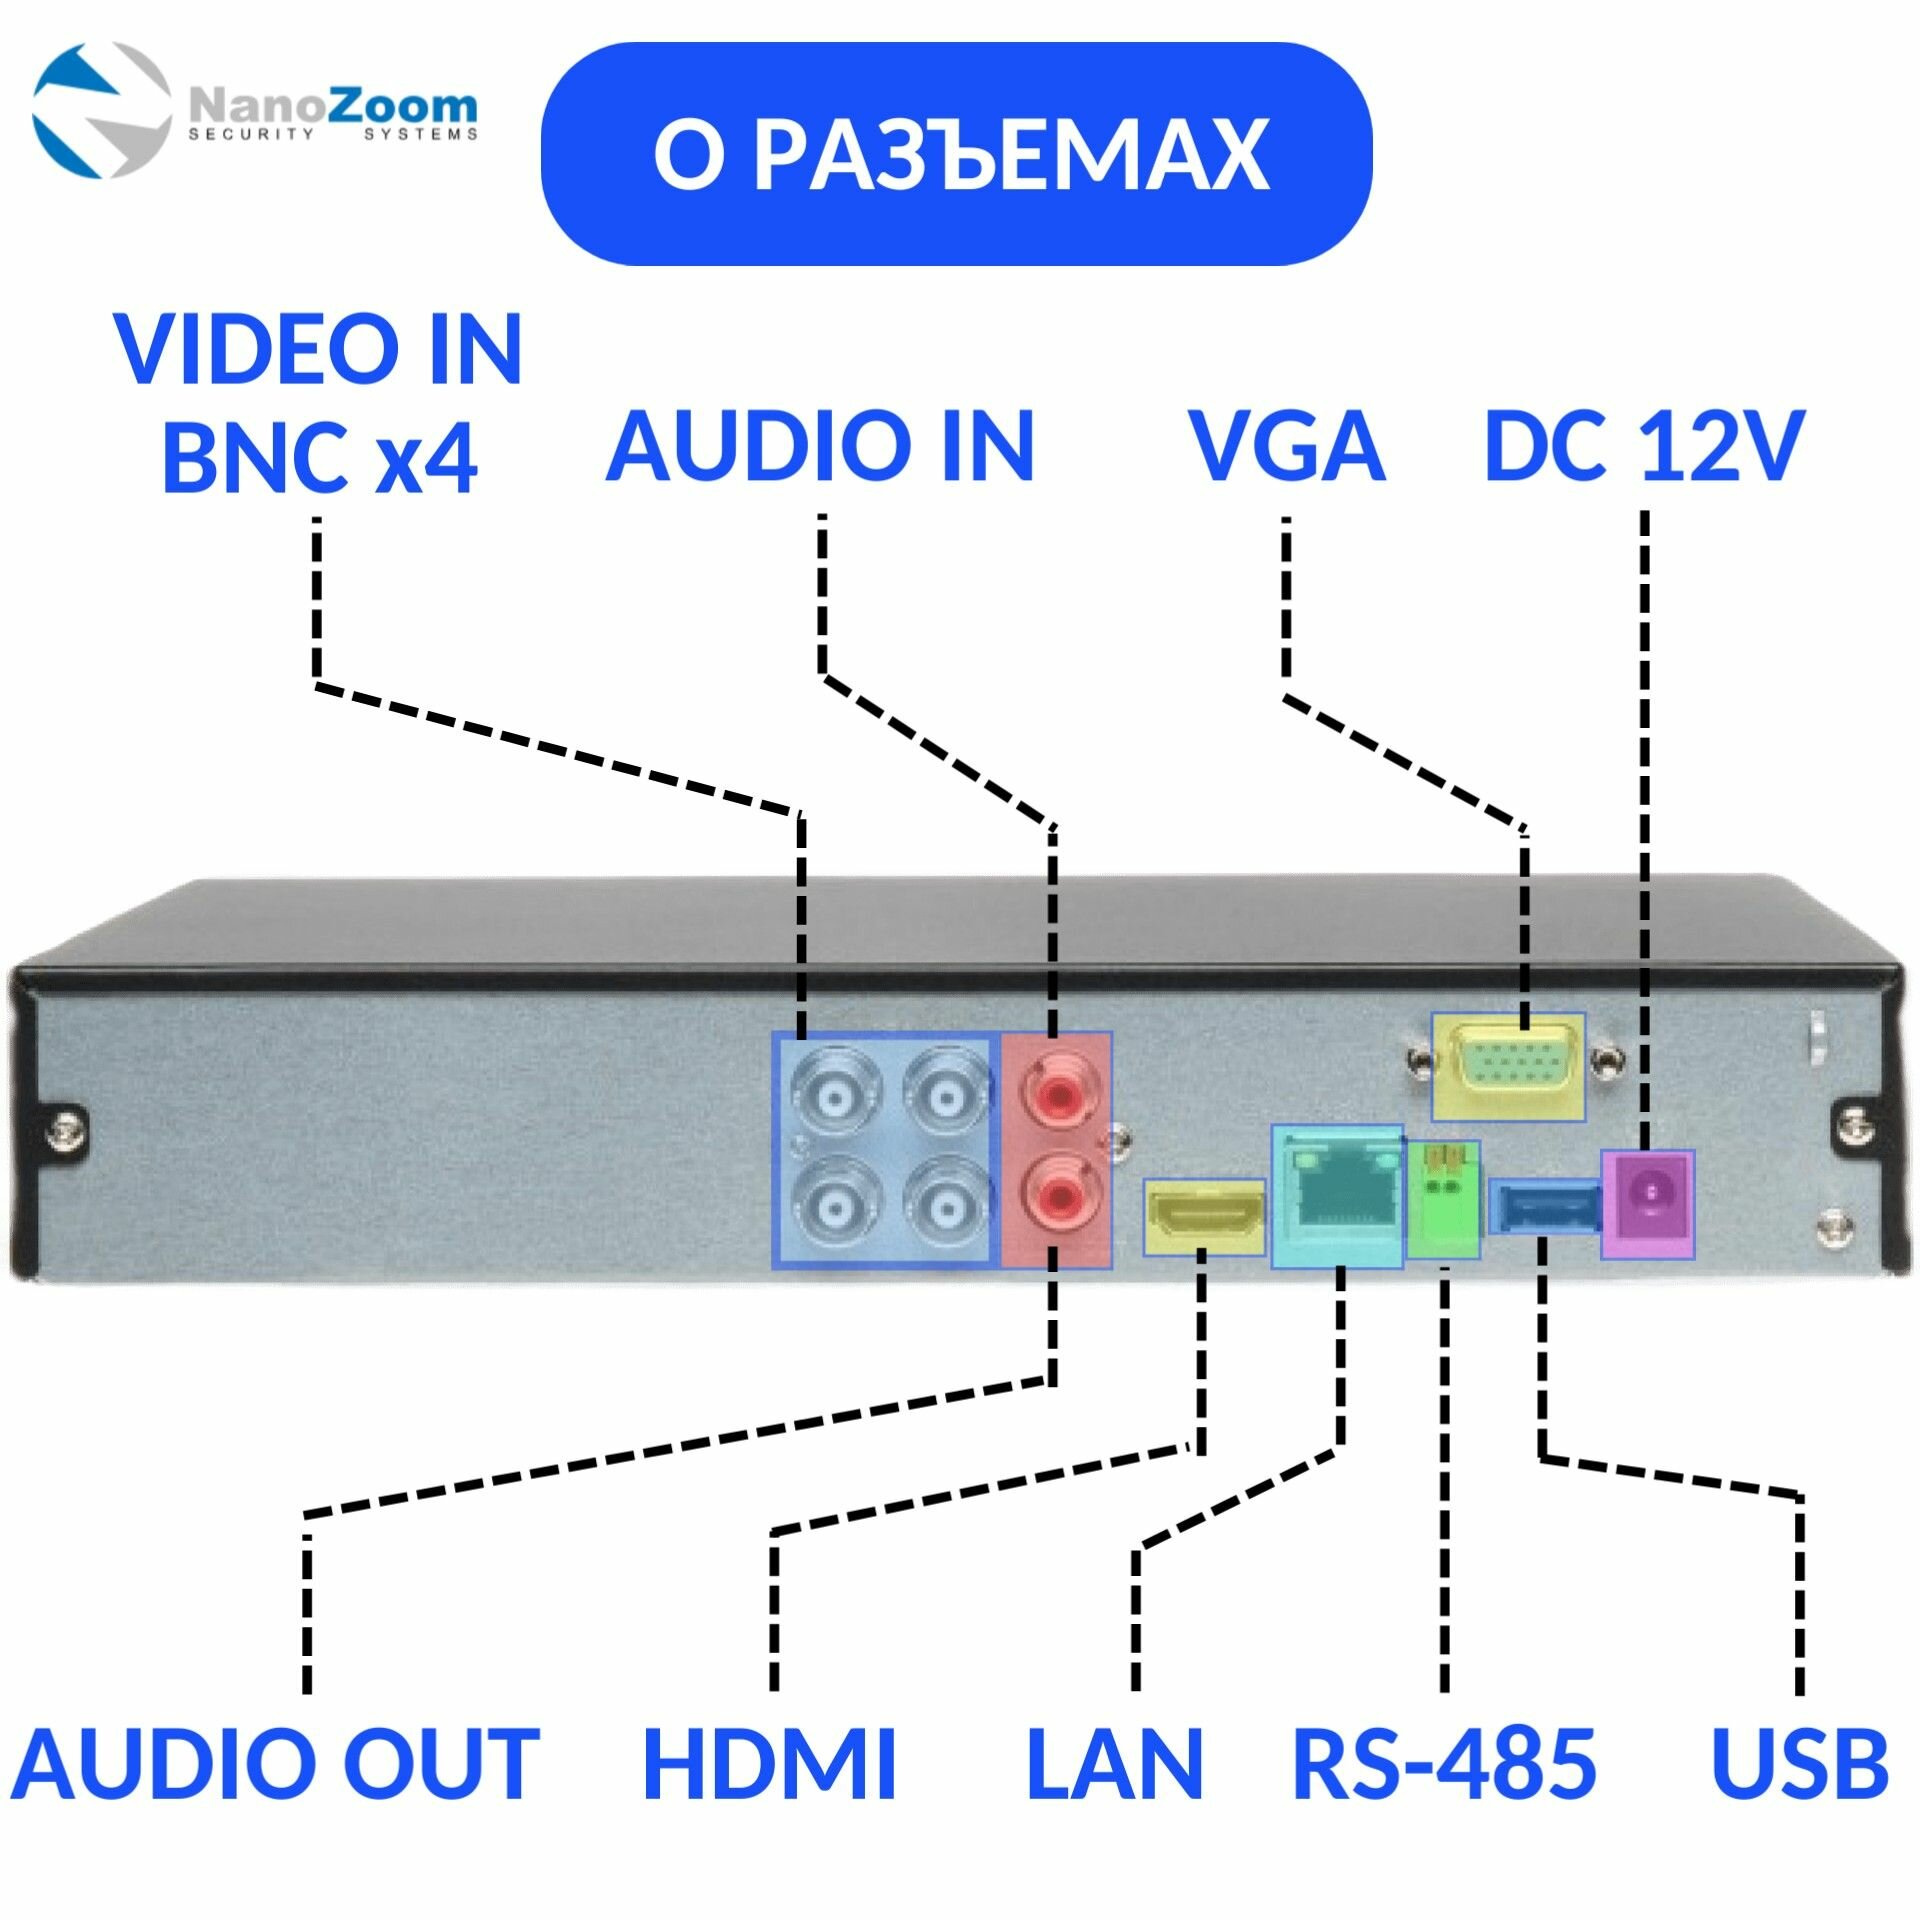 Dahua DH-XVR5104HS-I3 - 4 канальный видеорегистратор для видеонаблюдения HDCVI, XVR-регистратор гибридный 5M-N/4M-N/1080p/720p 1HDD DVR, SMD Plus H.265+/H.265, поддержка HDCVI, AHD, TVI, CVBS, IP